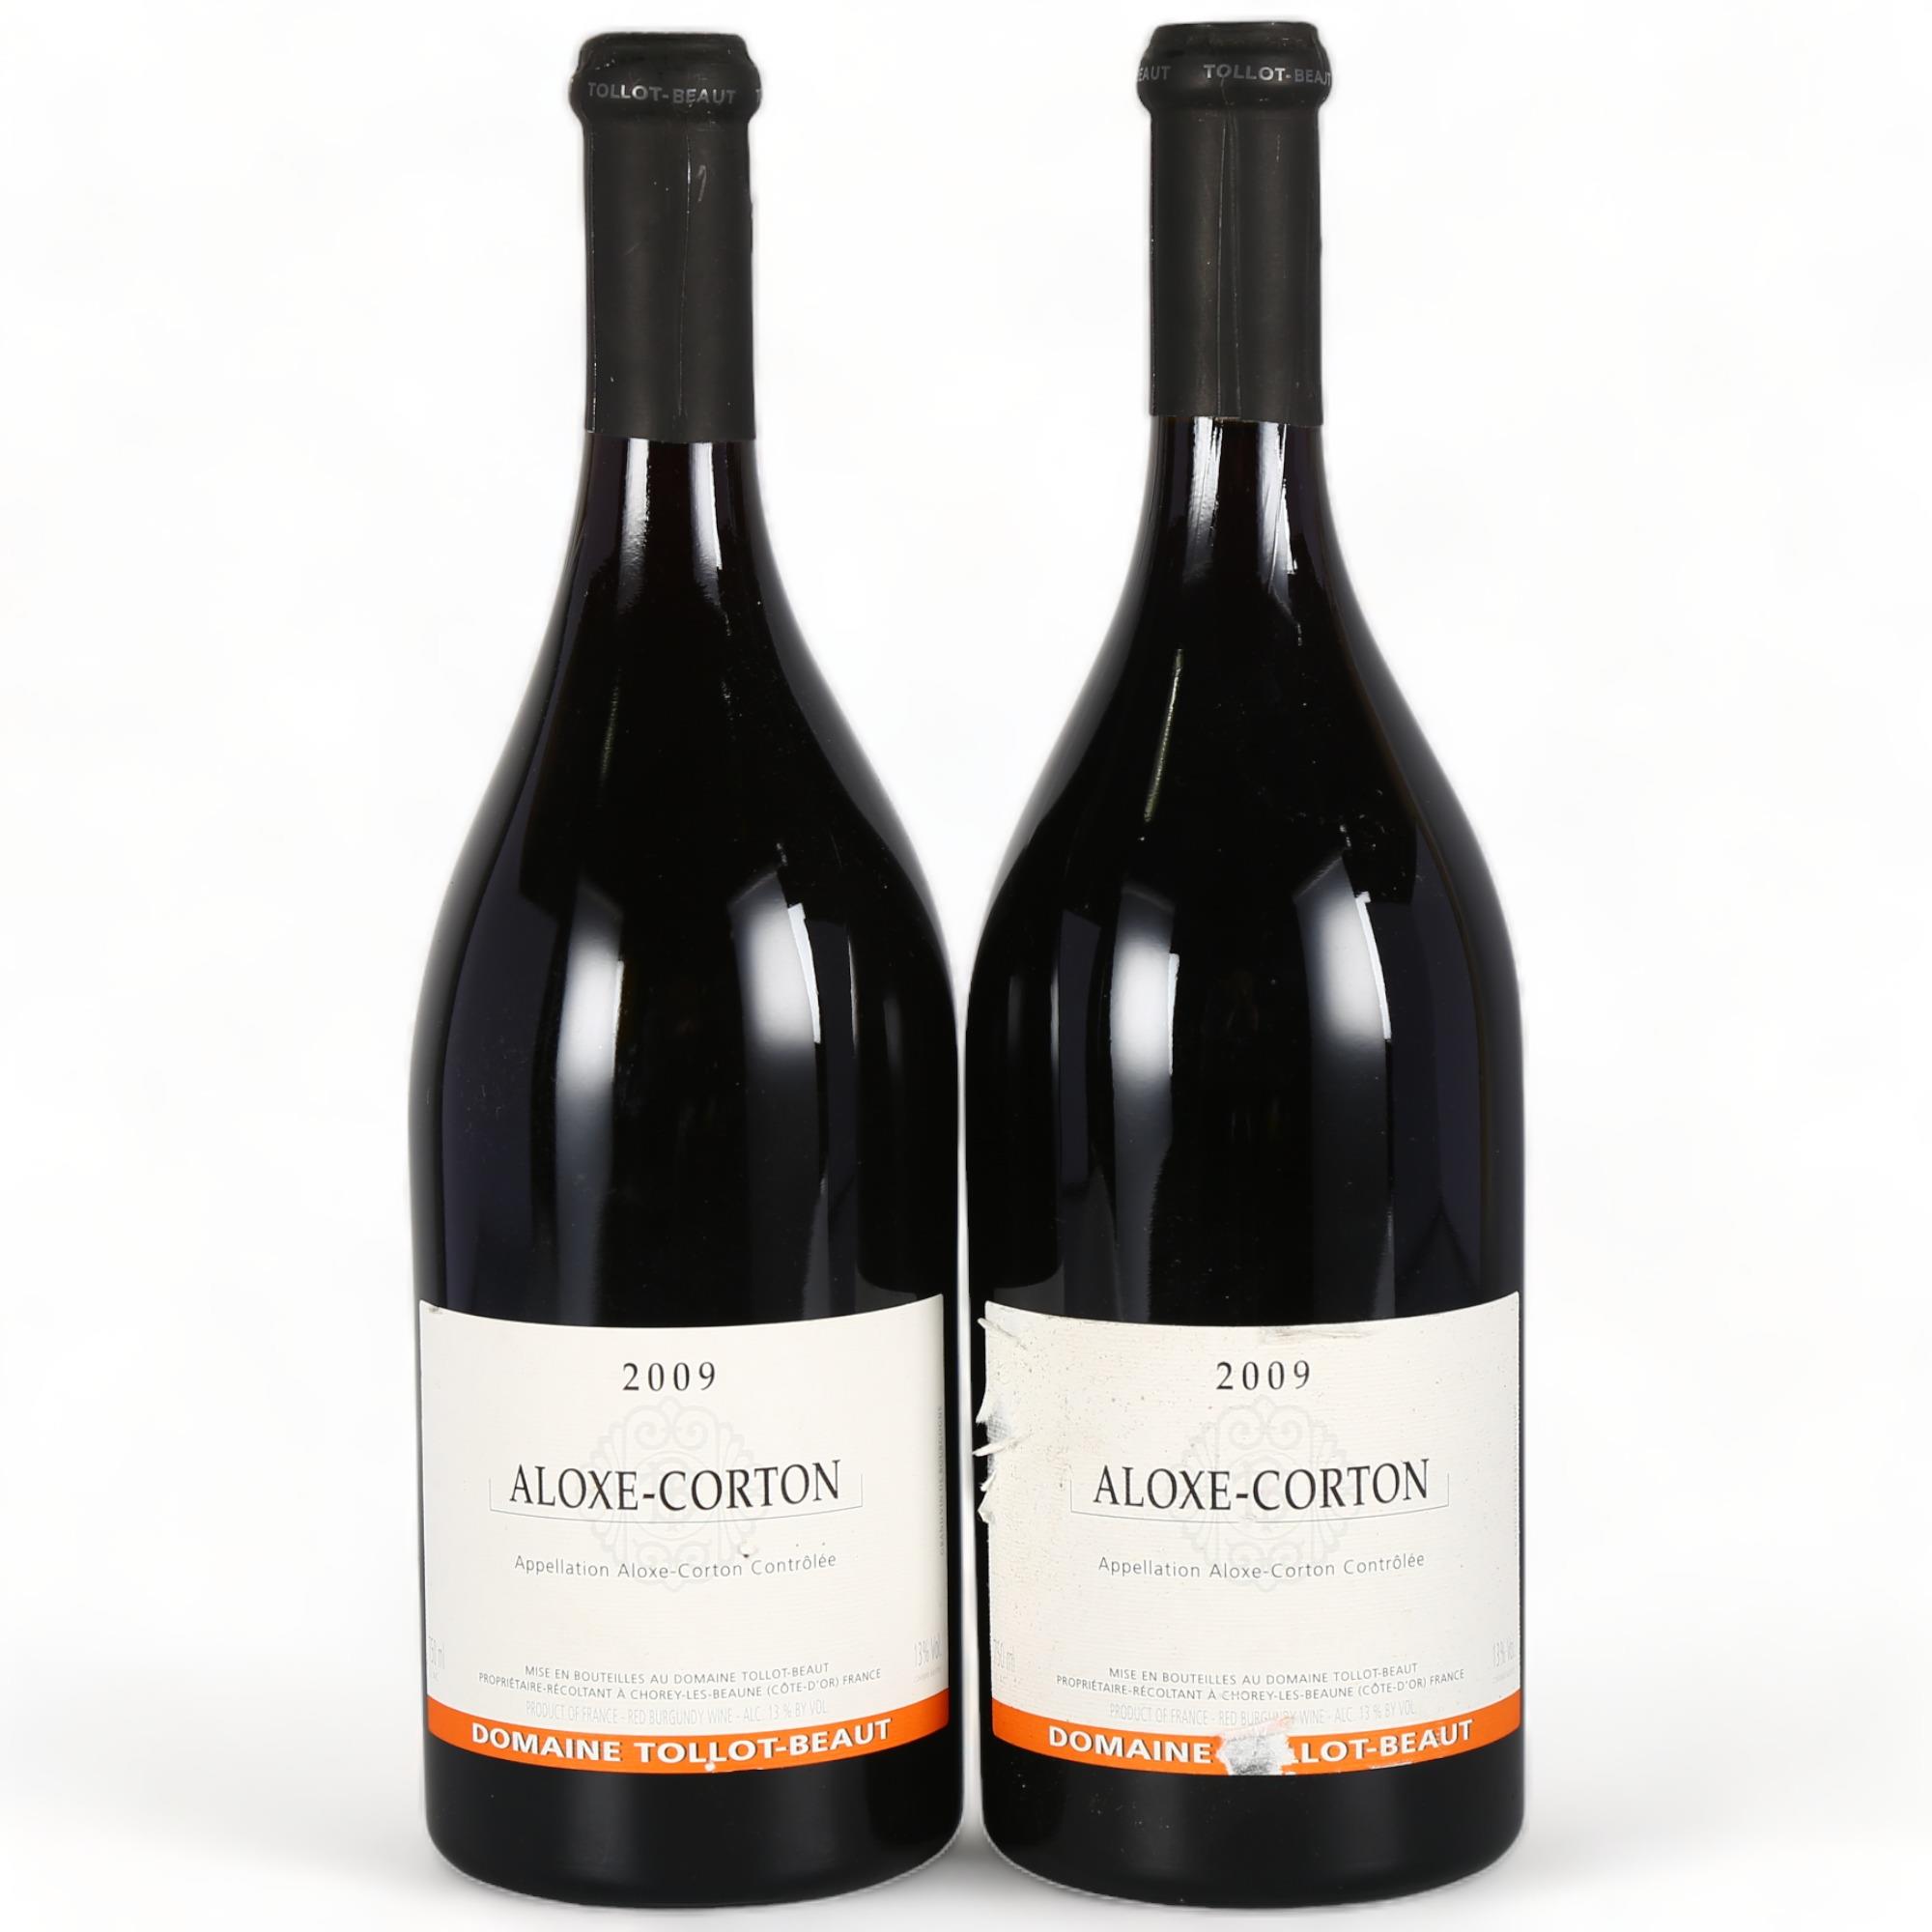 Aloxe-Corton 2009, Domaine Tollot-Beaut x 2 bottles. Burgundy red wine.